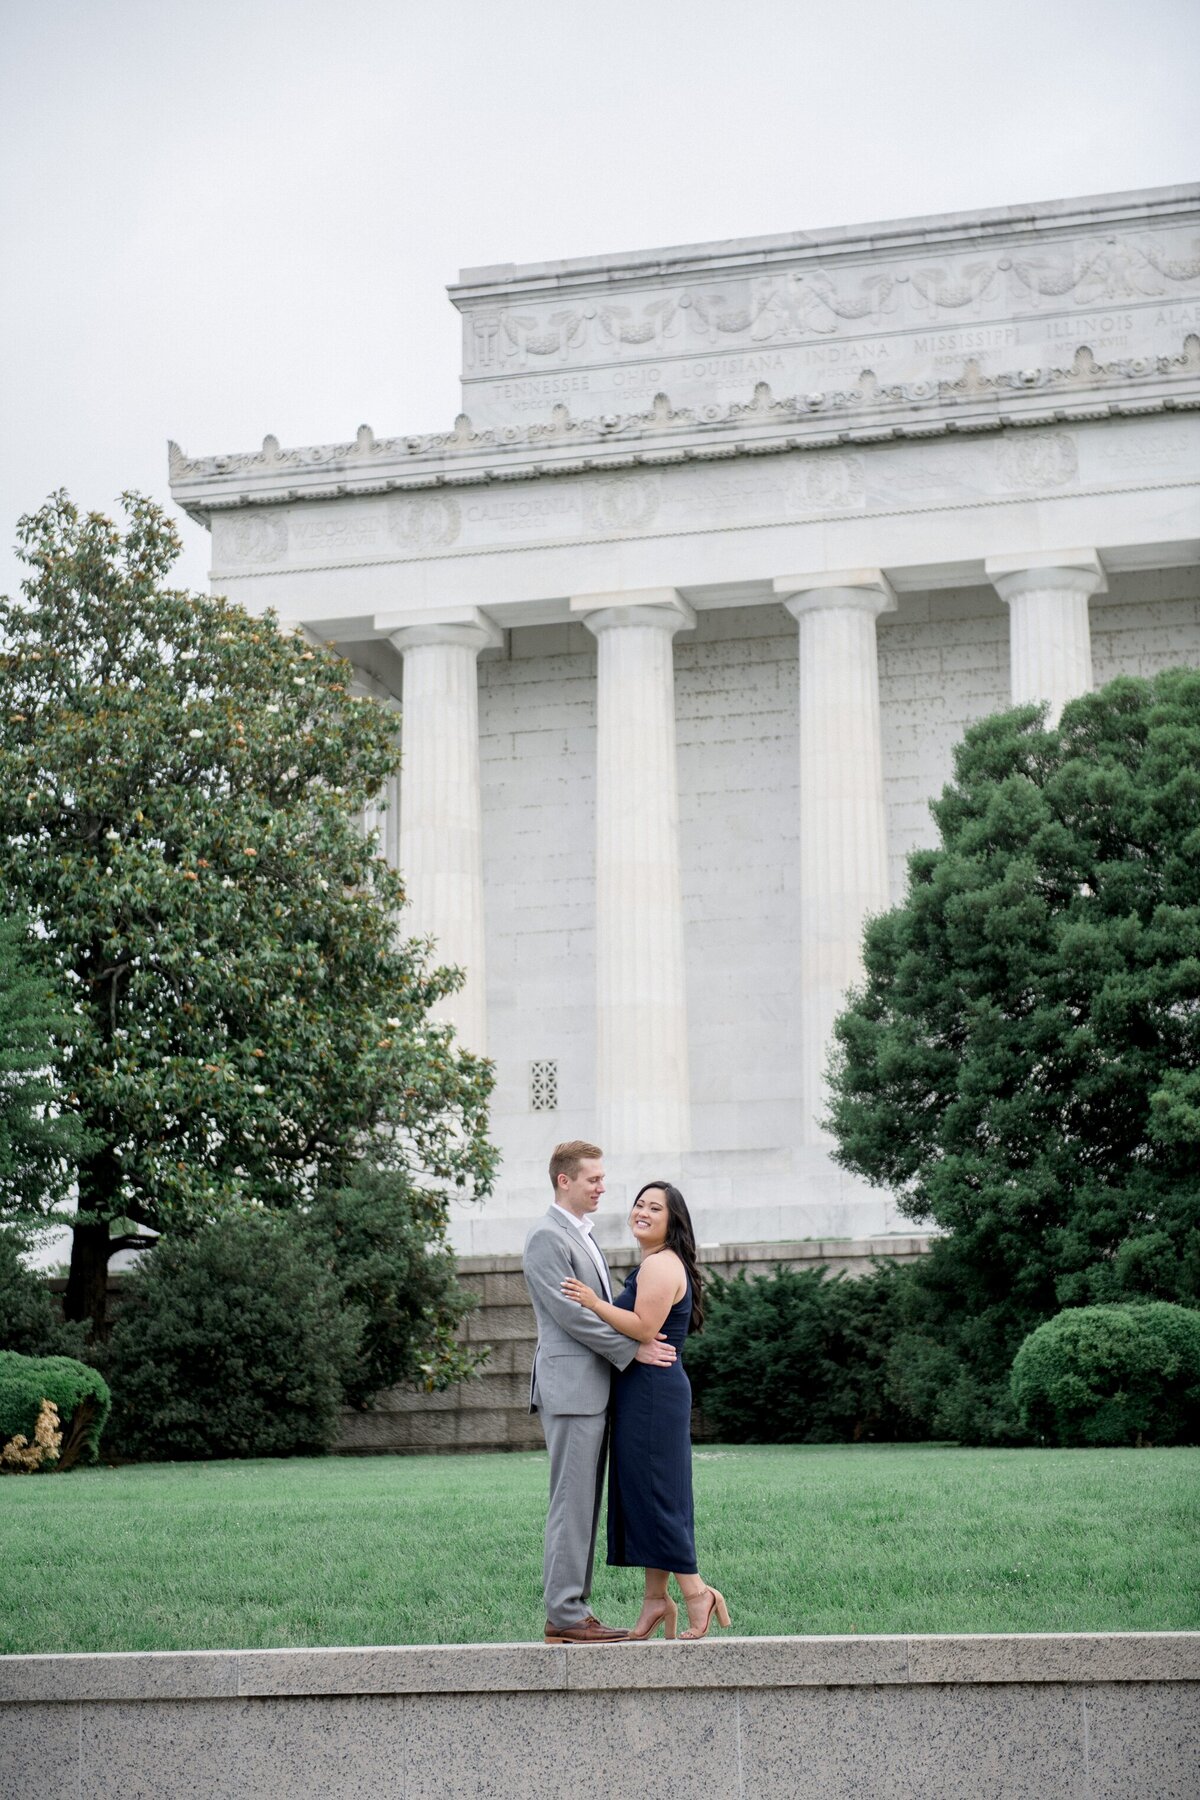 Lincoln Memorial Photographer - 11